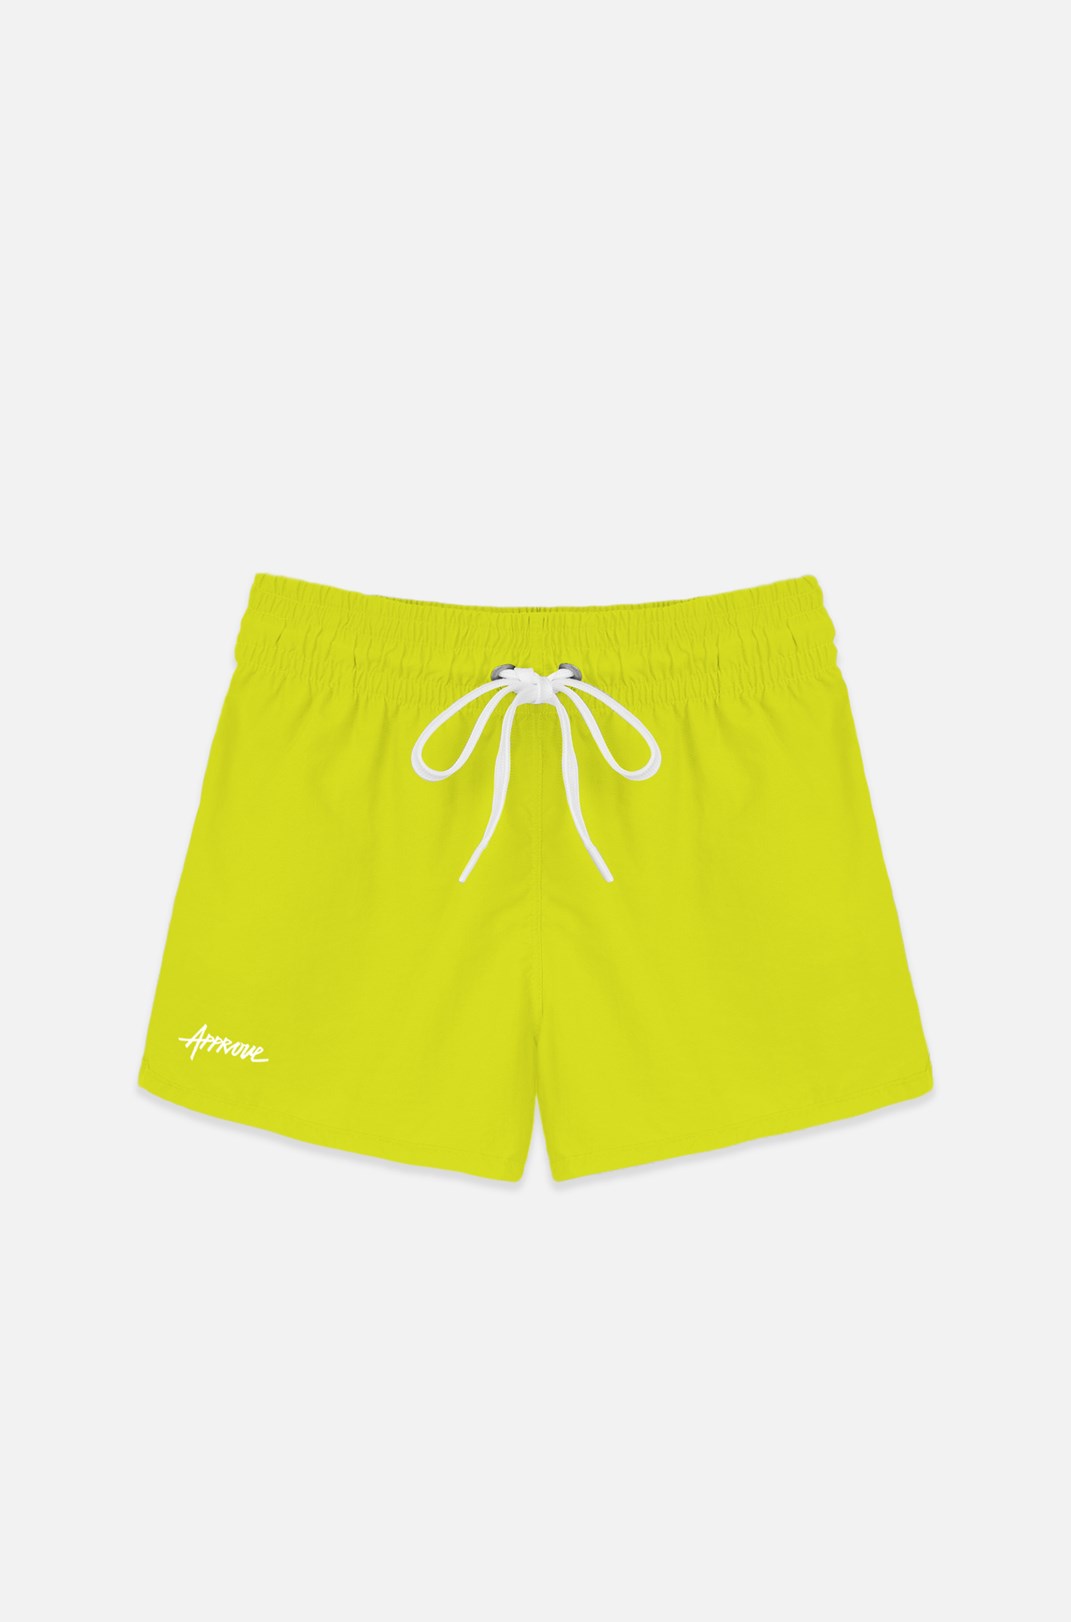 Shorts Approve Amarelo Neon II